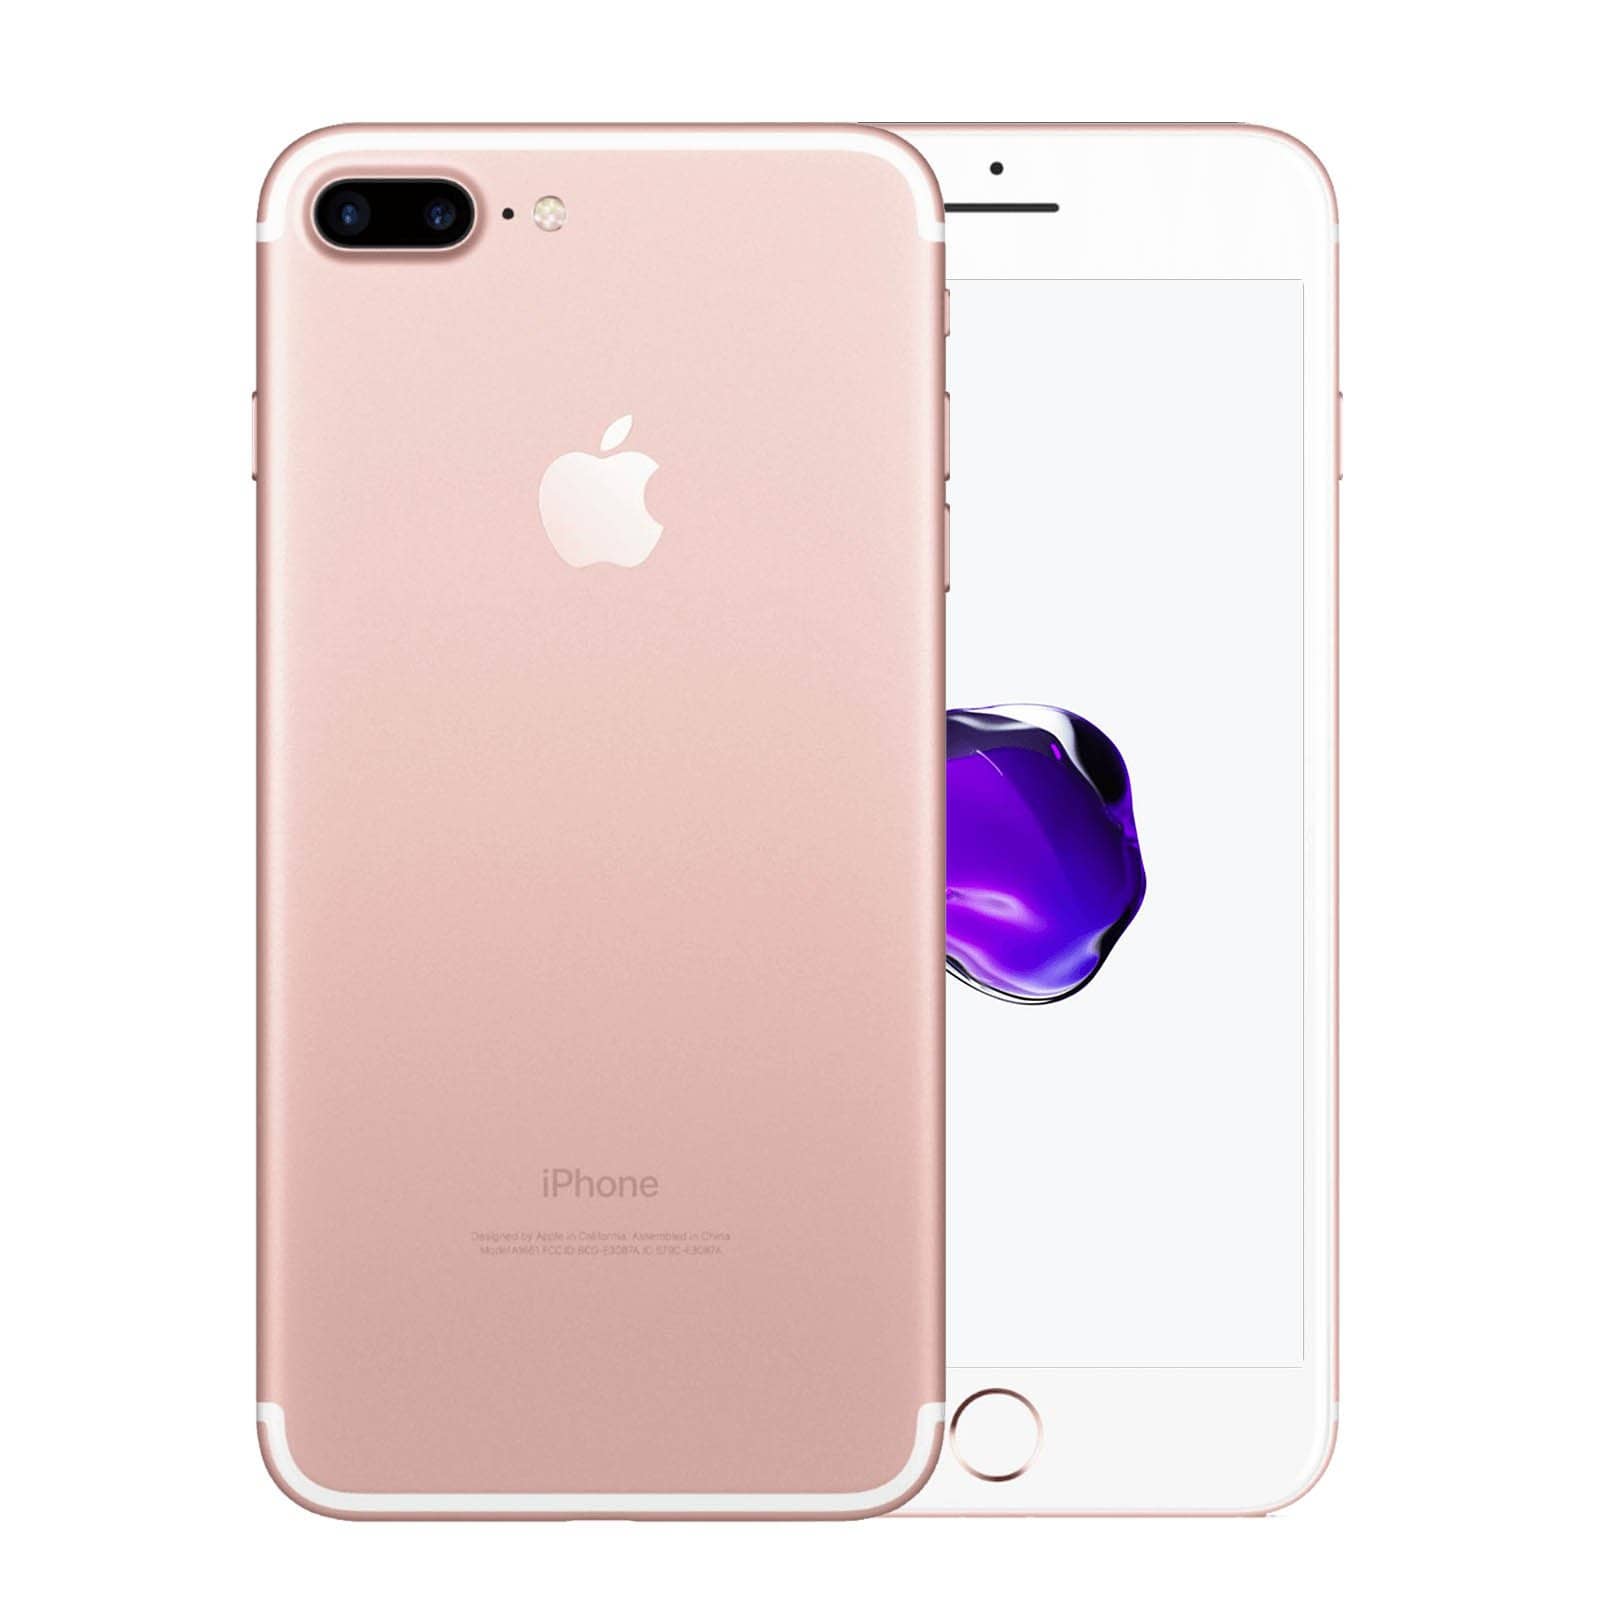 Apple iPhone 7 Plus 256GB Rose Gold Pristine - Unlocked